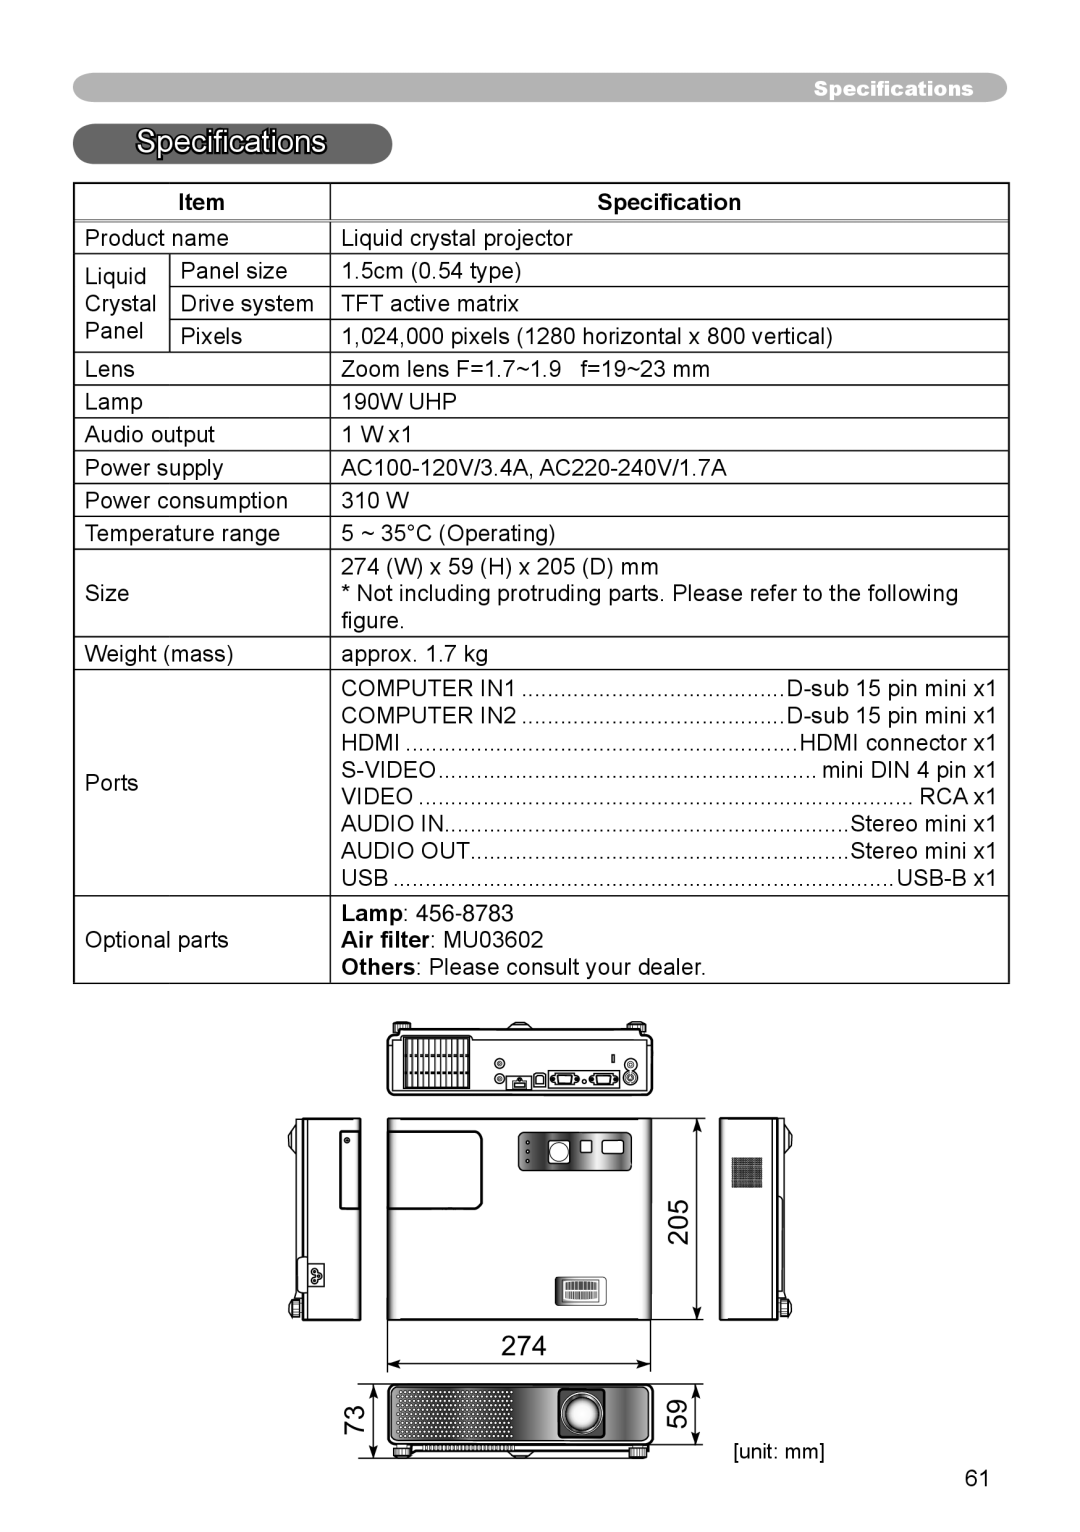 Dukane 8783 user manual Specifications, Air filter MU03602 